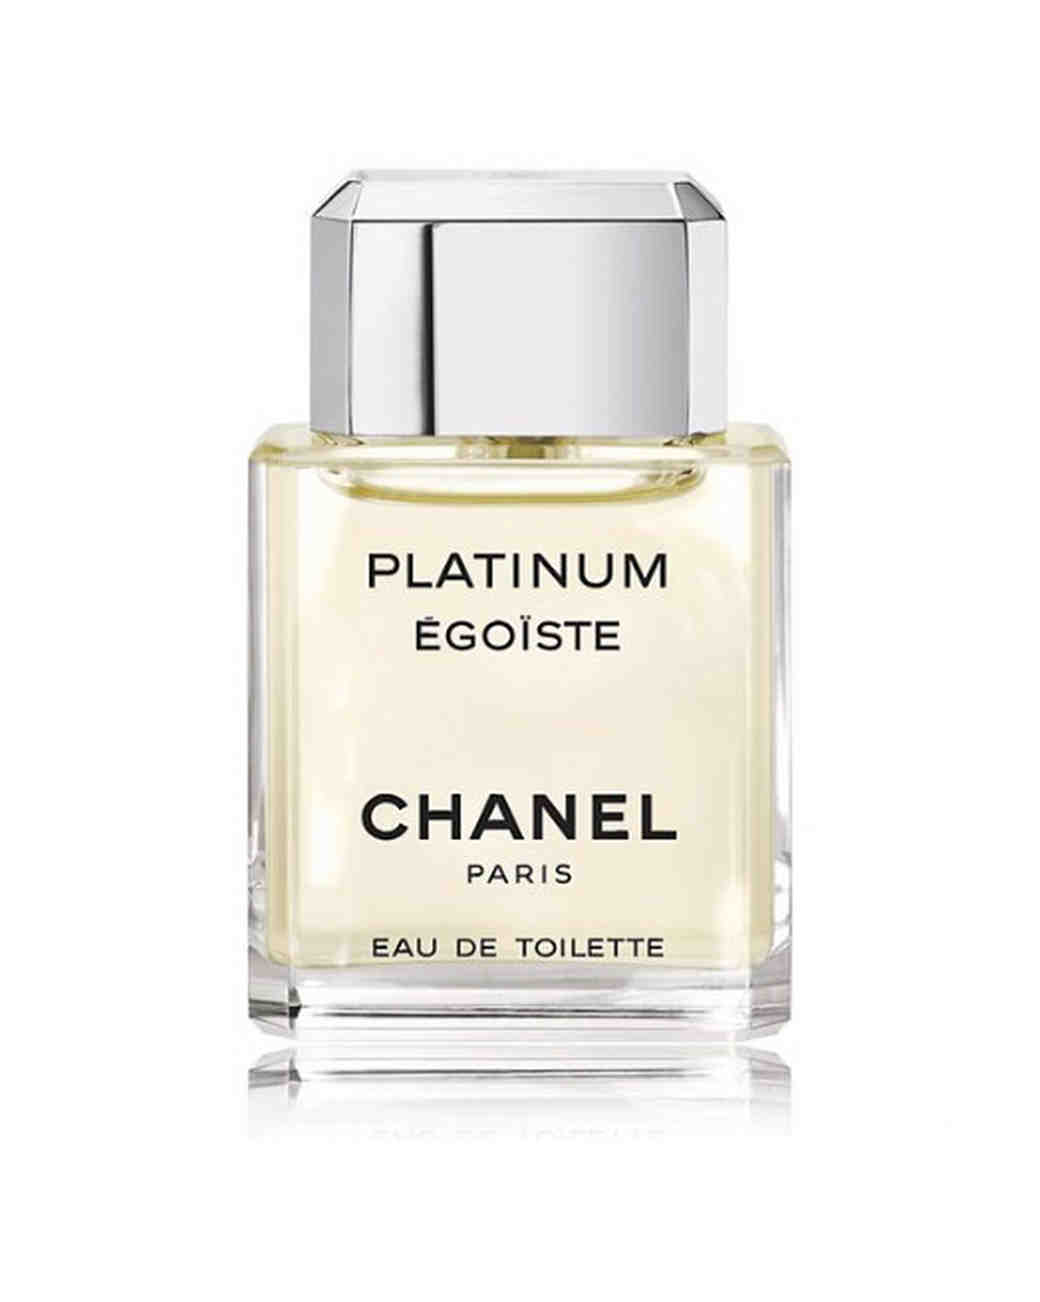 Platinum Anniversary Gifts Platinum Egoiste Eau De Toilette Chanel 0418 Vert ?itok=mgaVYImK